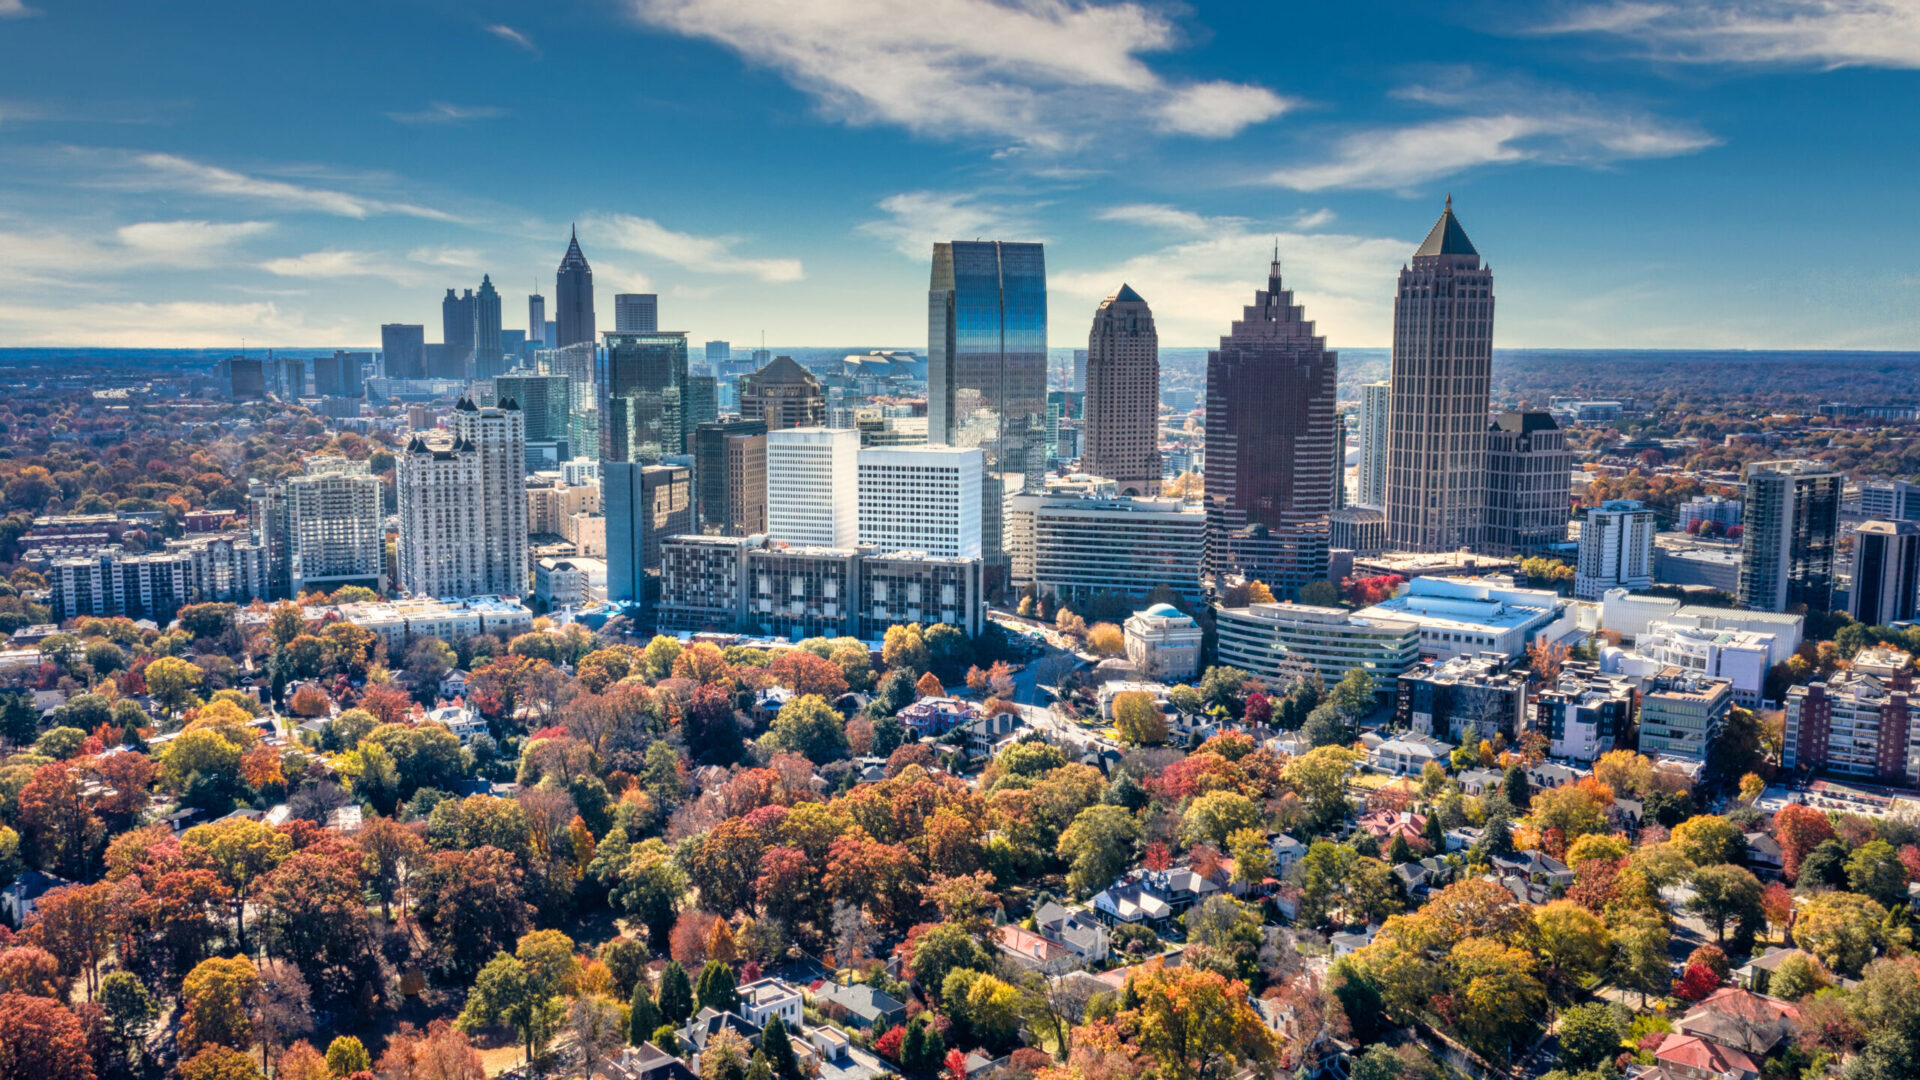 Atlanta Commercial Property Market Adjusting To New Economy